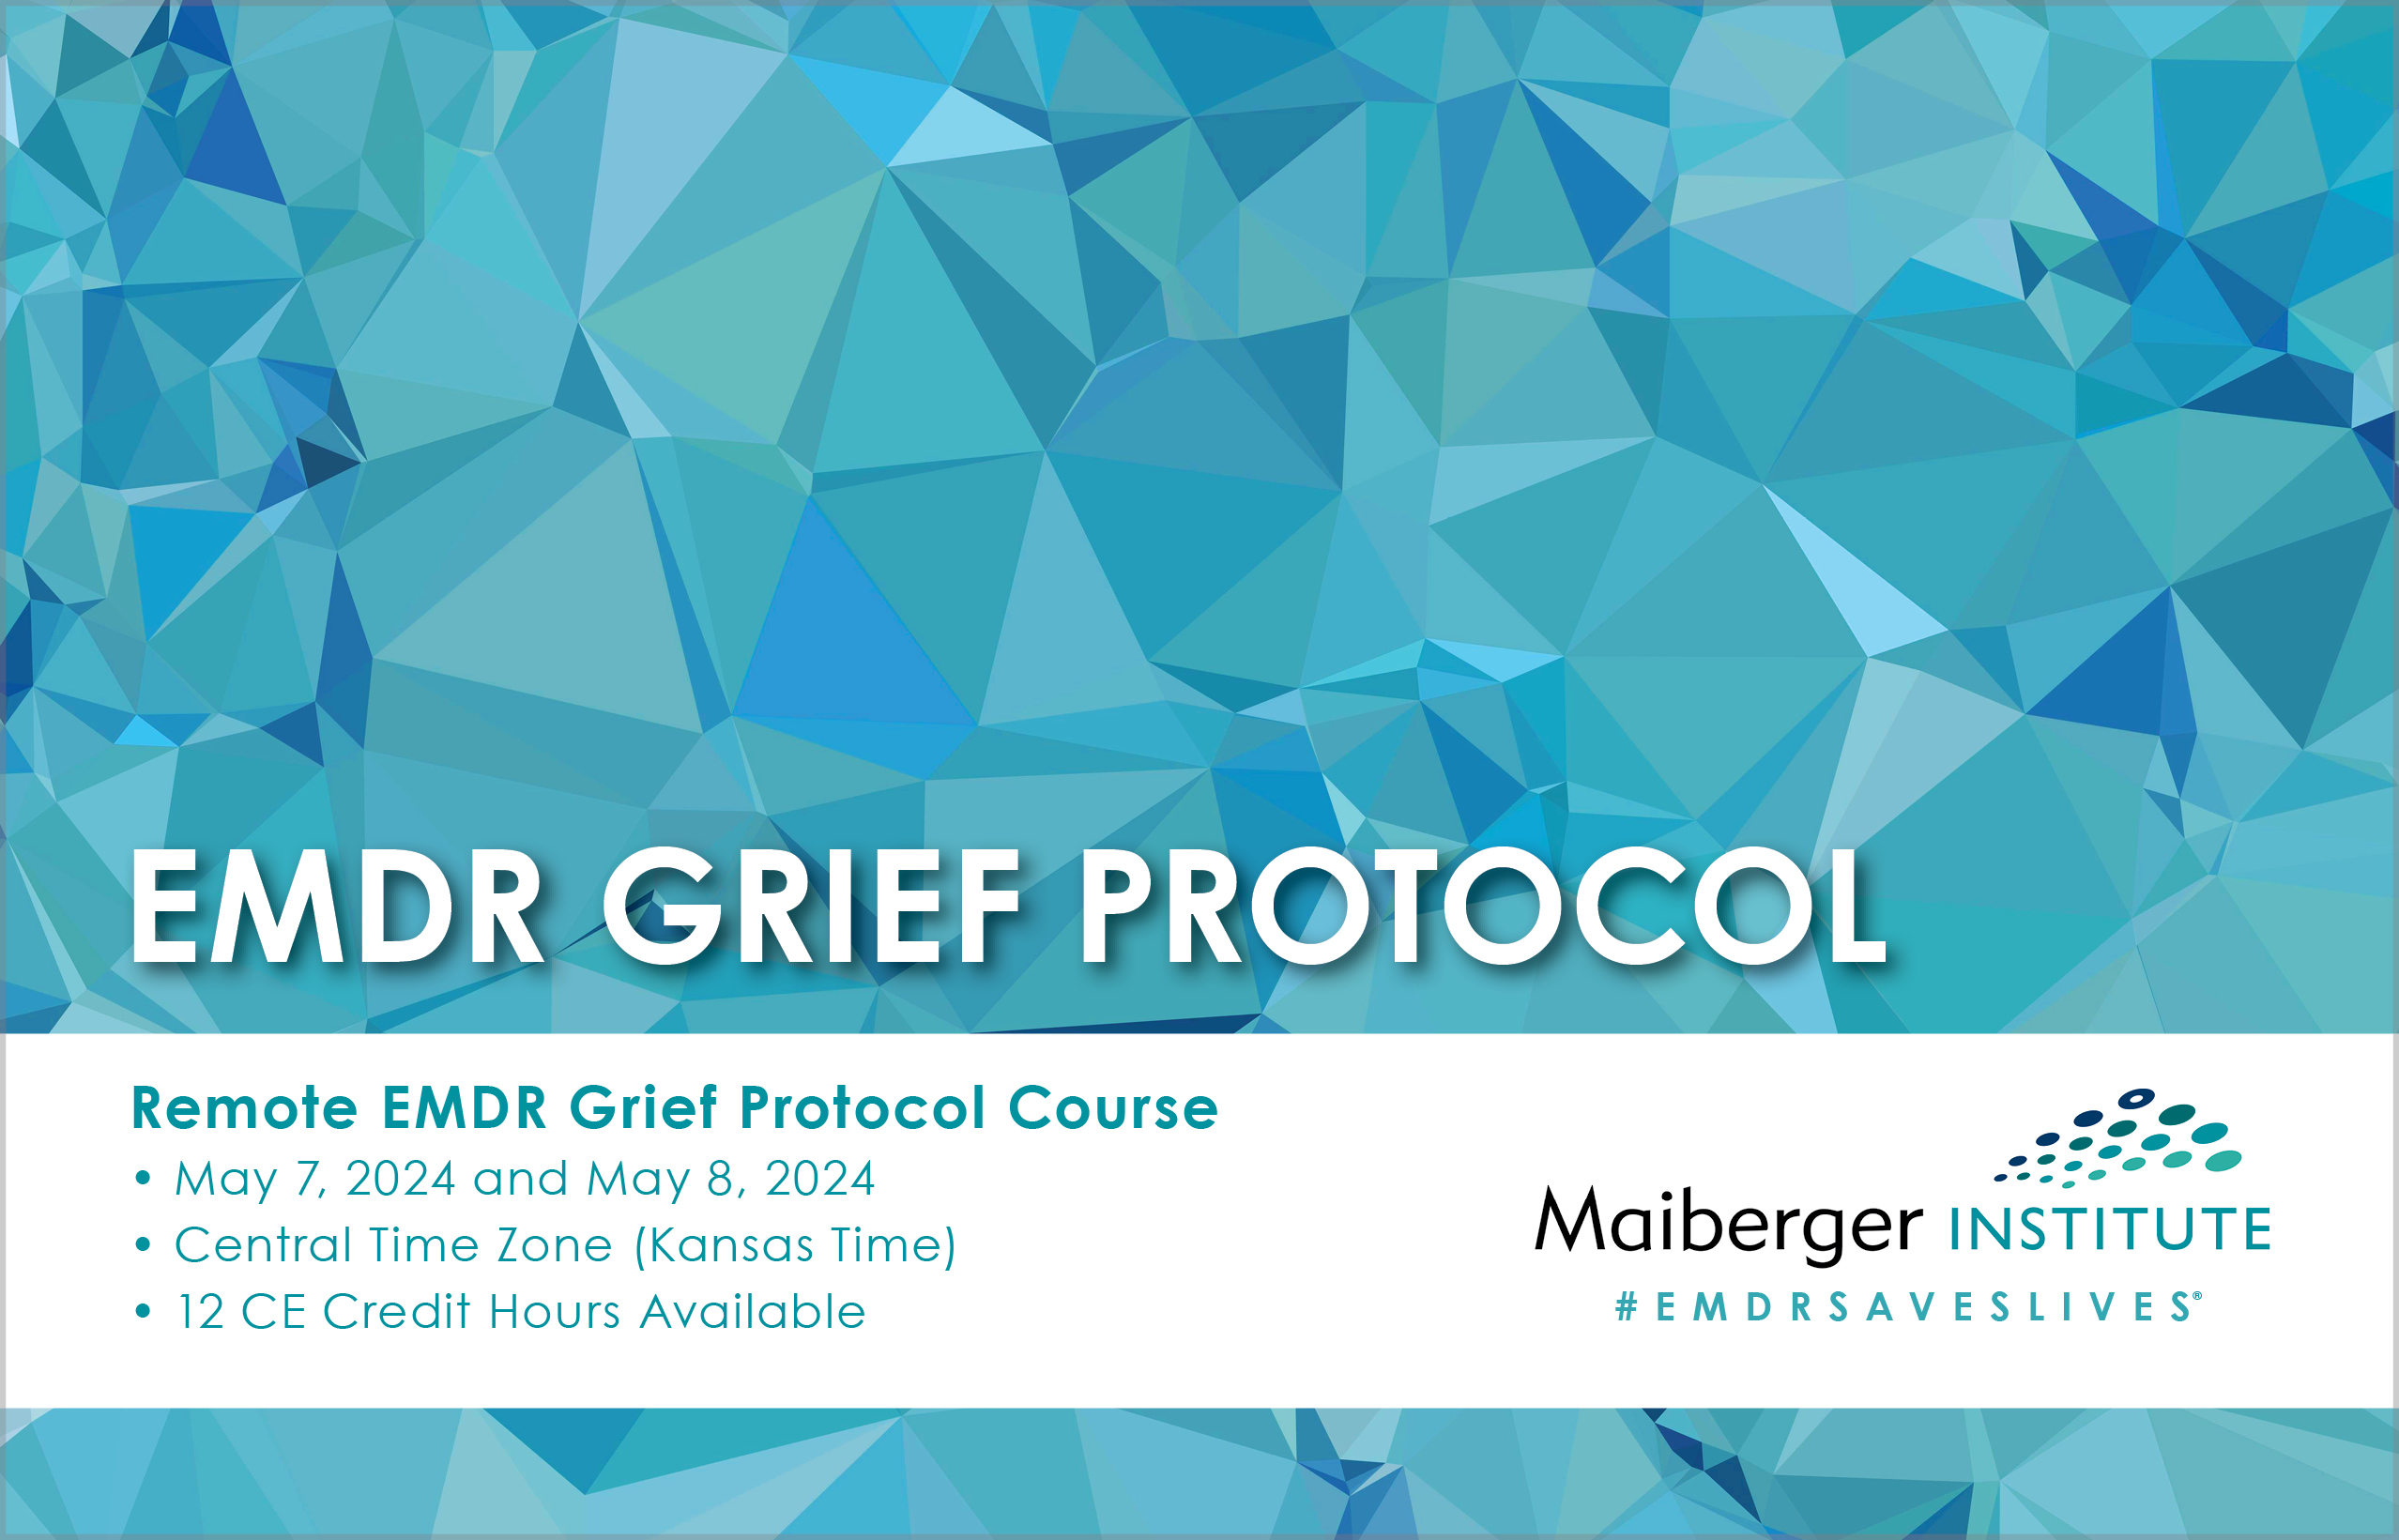 Remote EMDR Grief Protocol Course - May 2024 - EMDR Events Calendar - Maiberger Institute